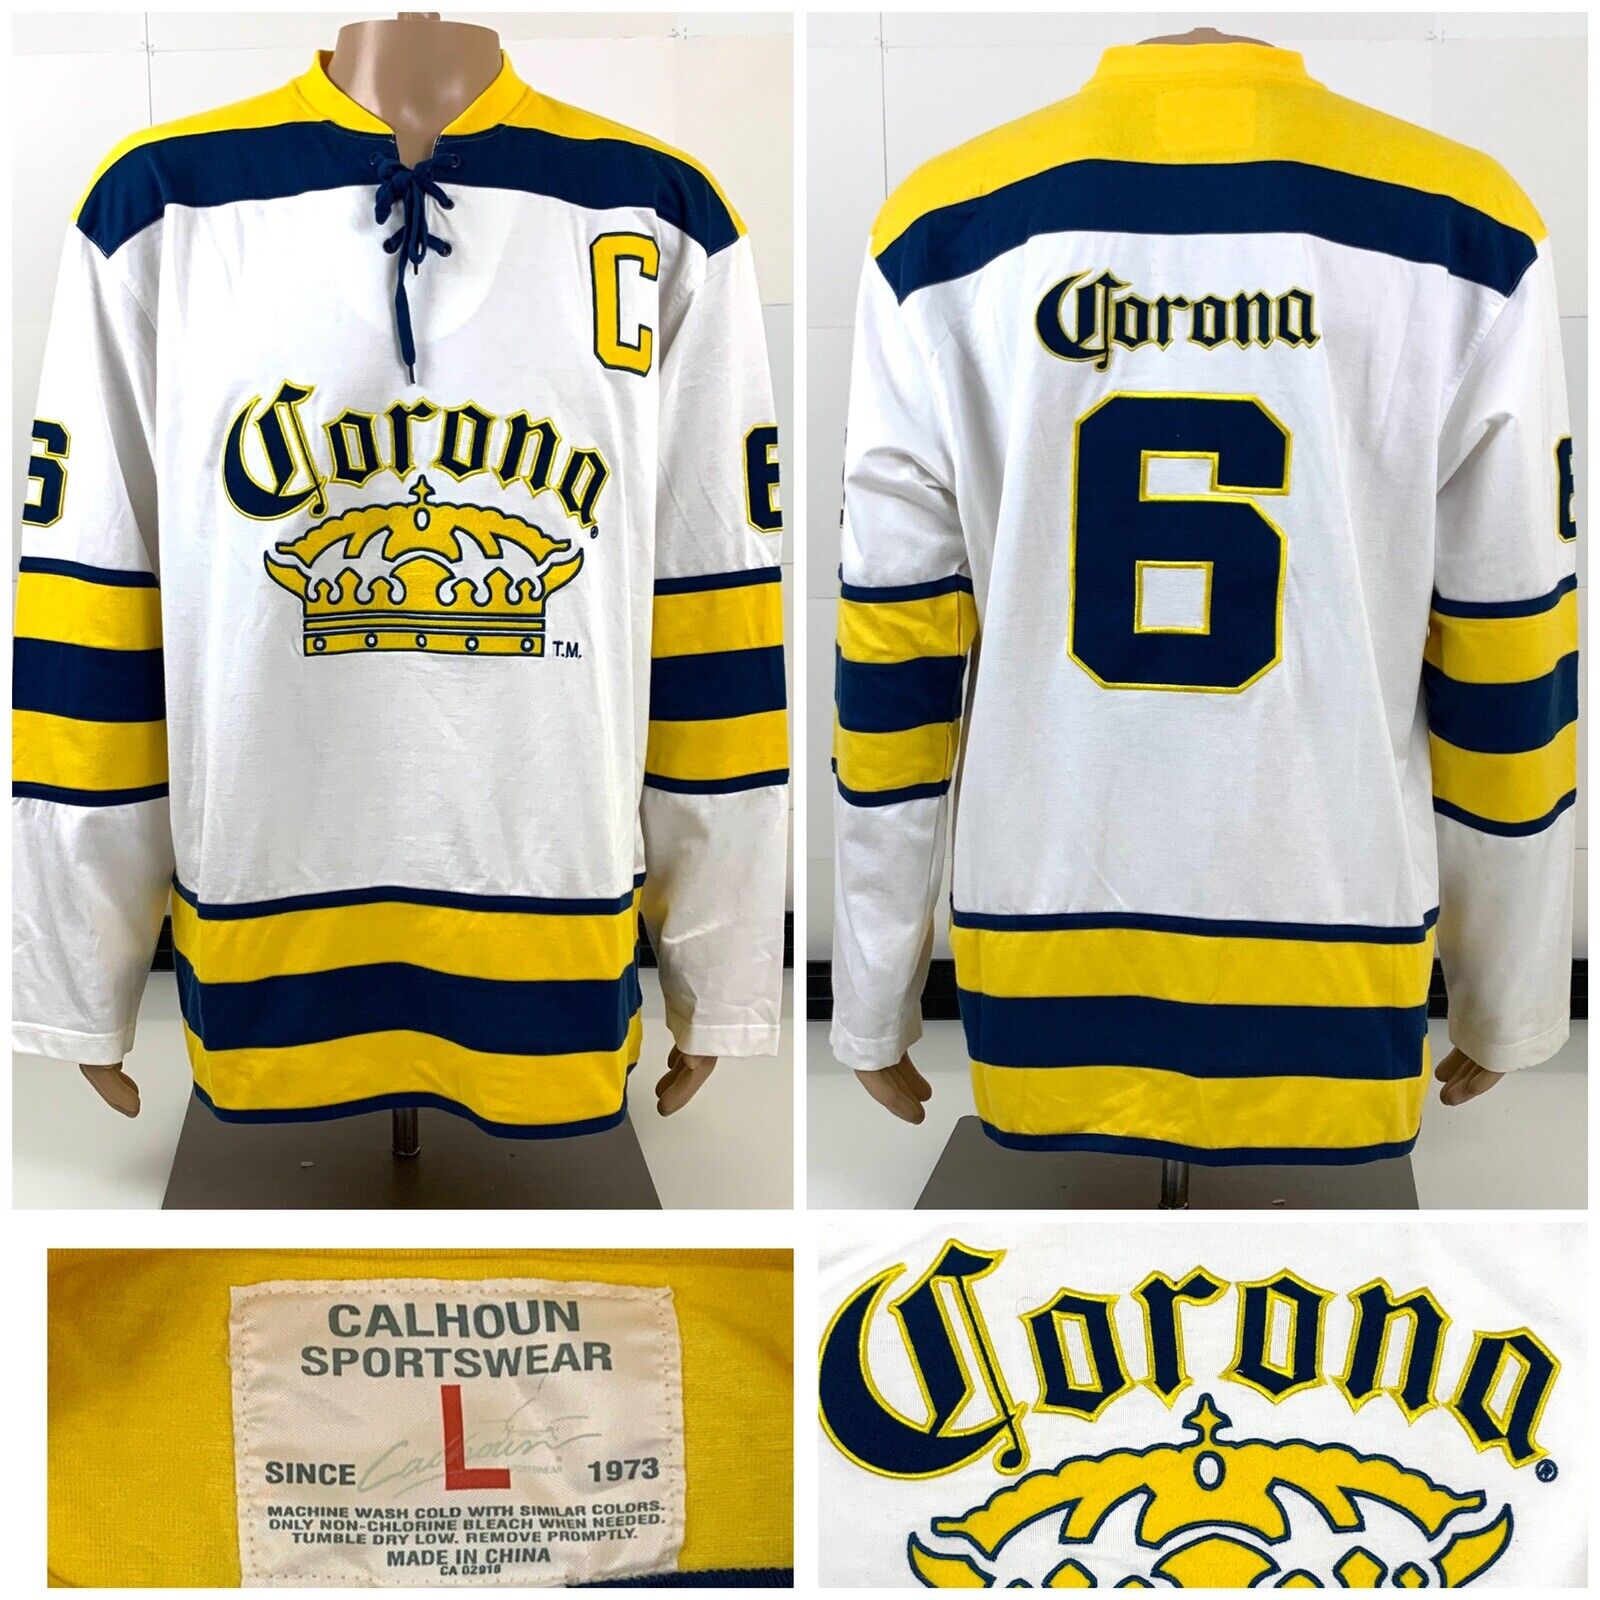 Aanhankelijk passend was Vintage Calhoun Sportswear Corona Extra Beer Jersey Stitched Soccer Jersey  Large | eBay